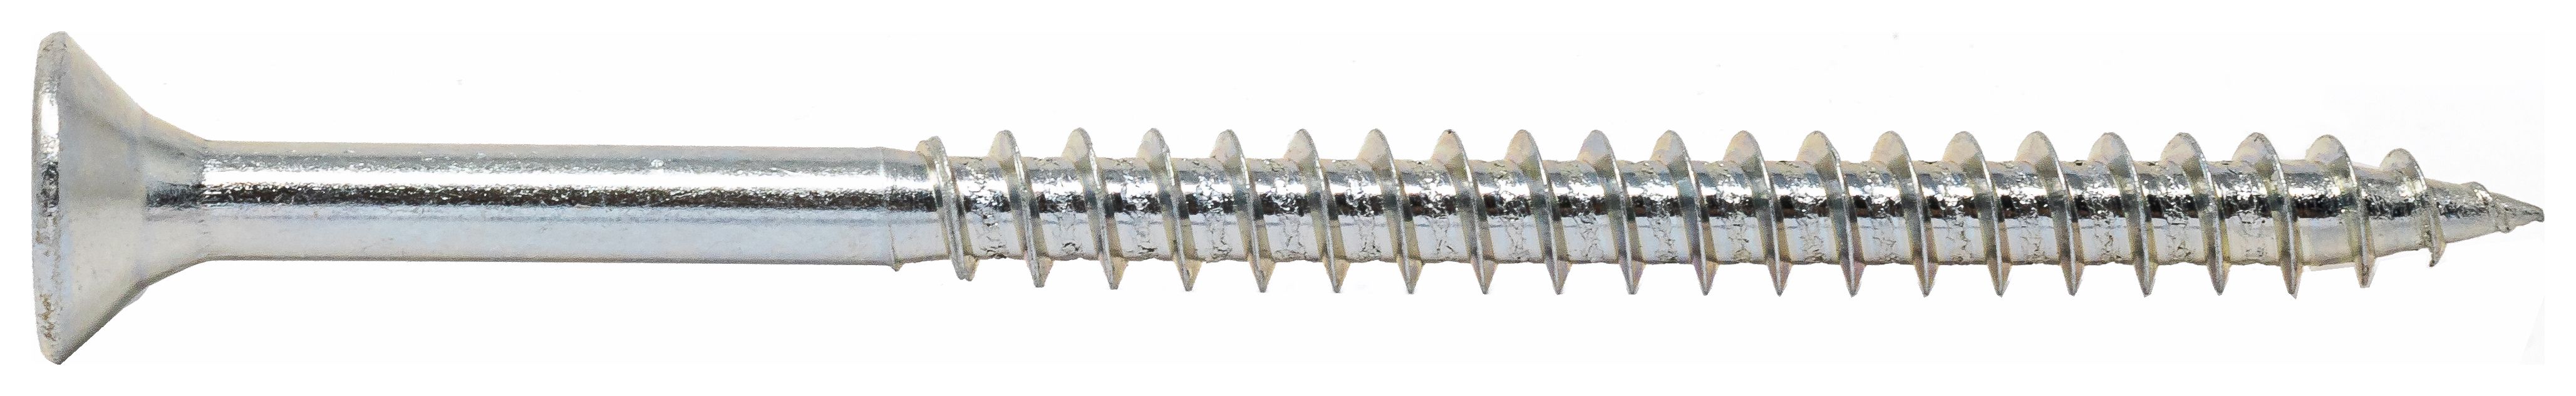 Wickes Single Thread Zinc Plated Screw - 3.5 X 25mm Pack Of 200